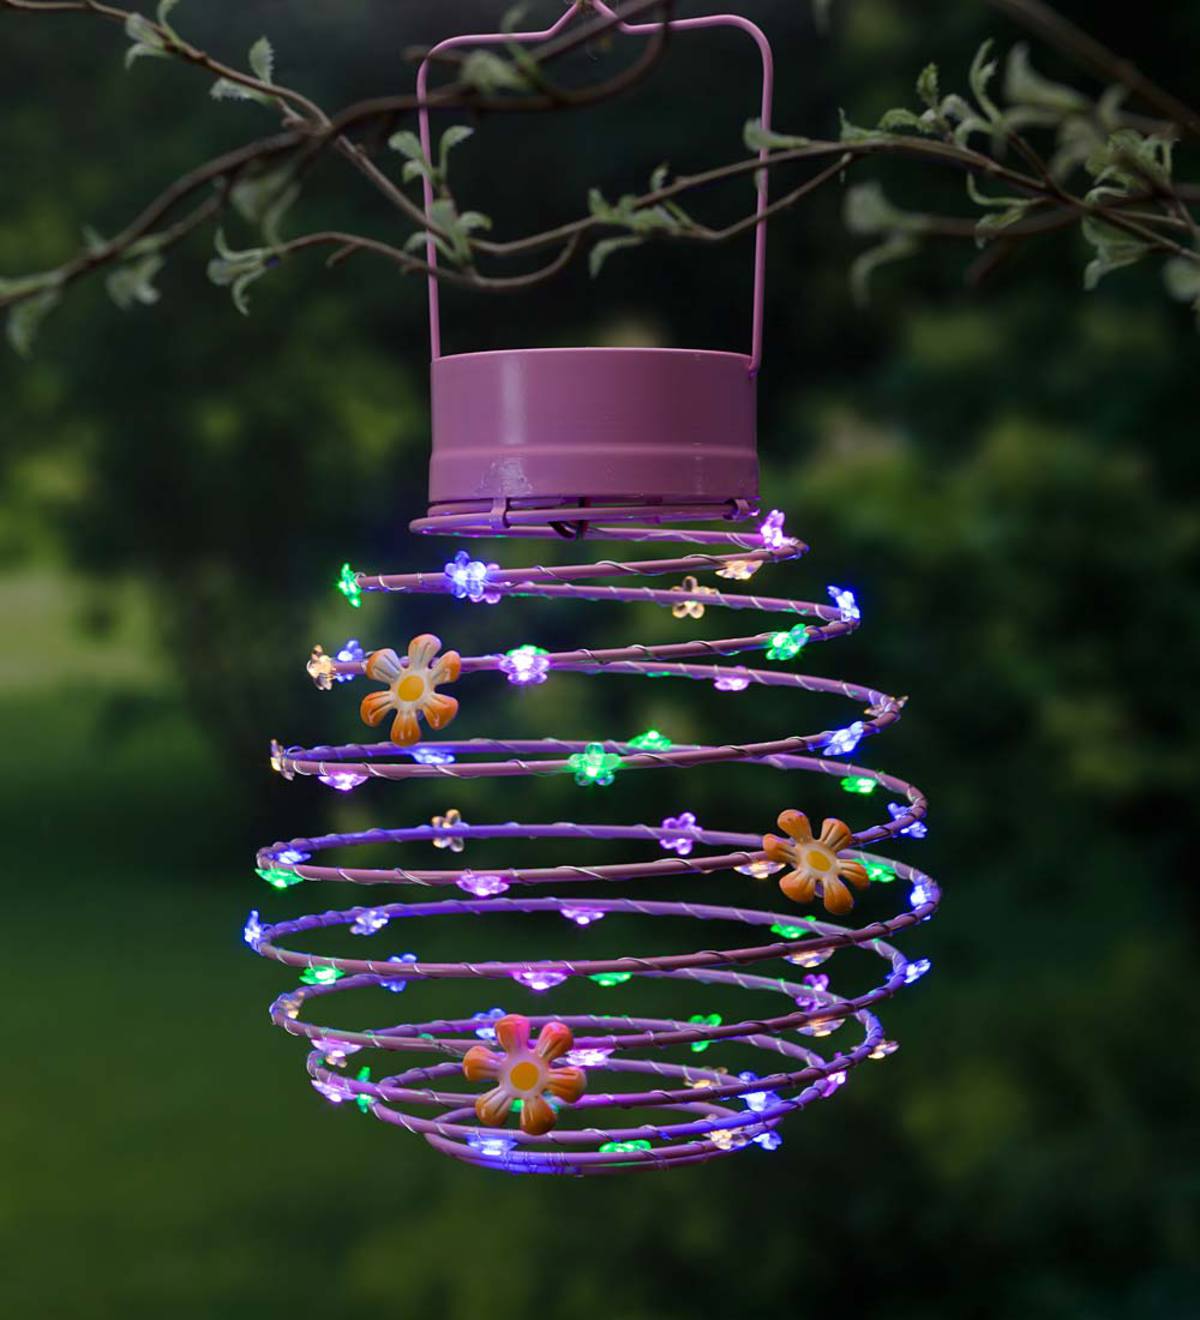 Hanging Spring-Coil Solar Lantern with Flower LEDs